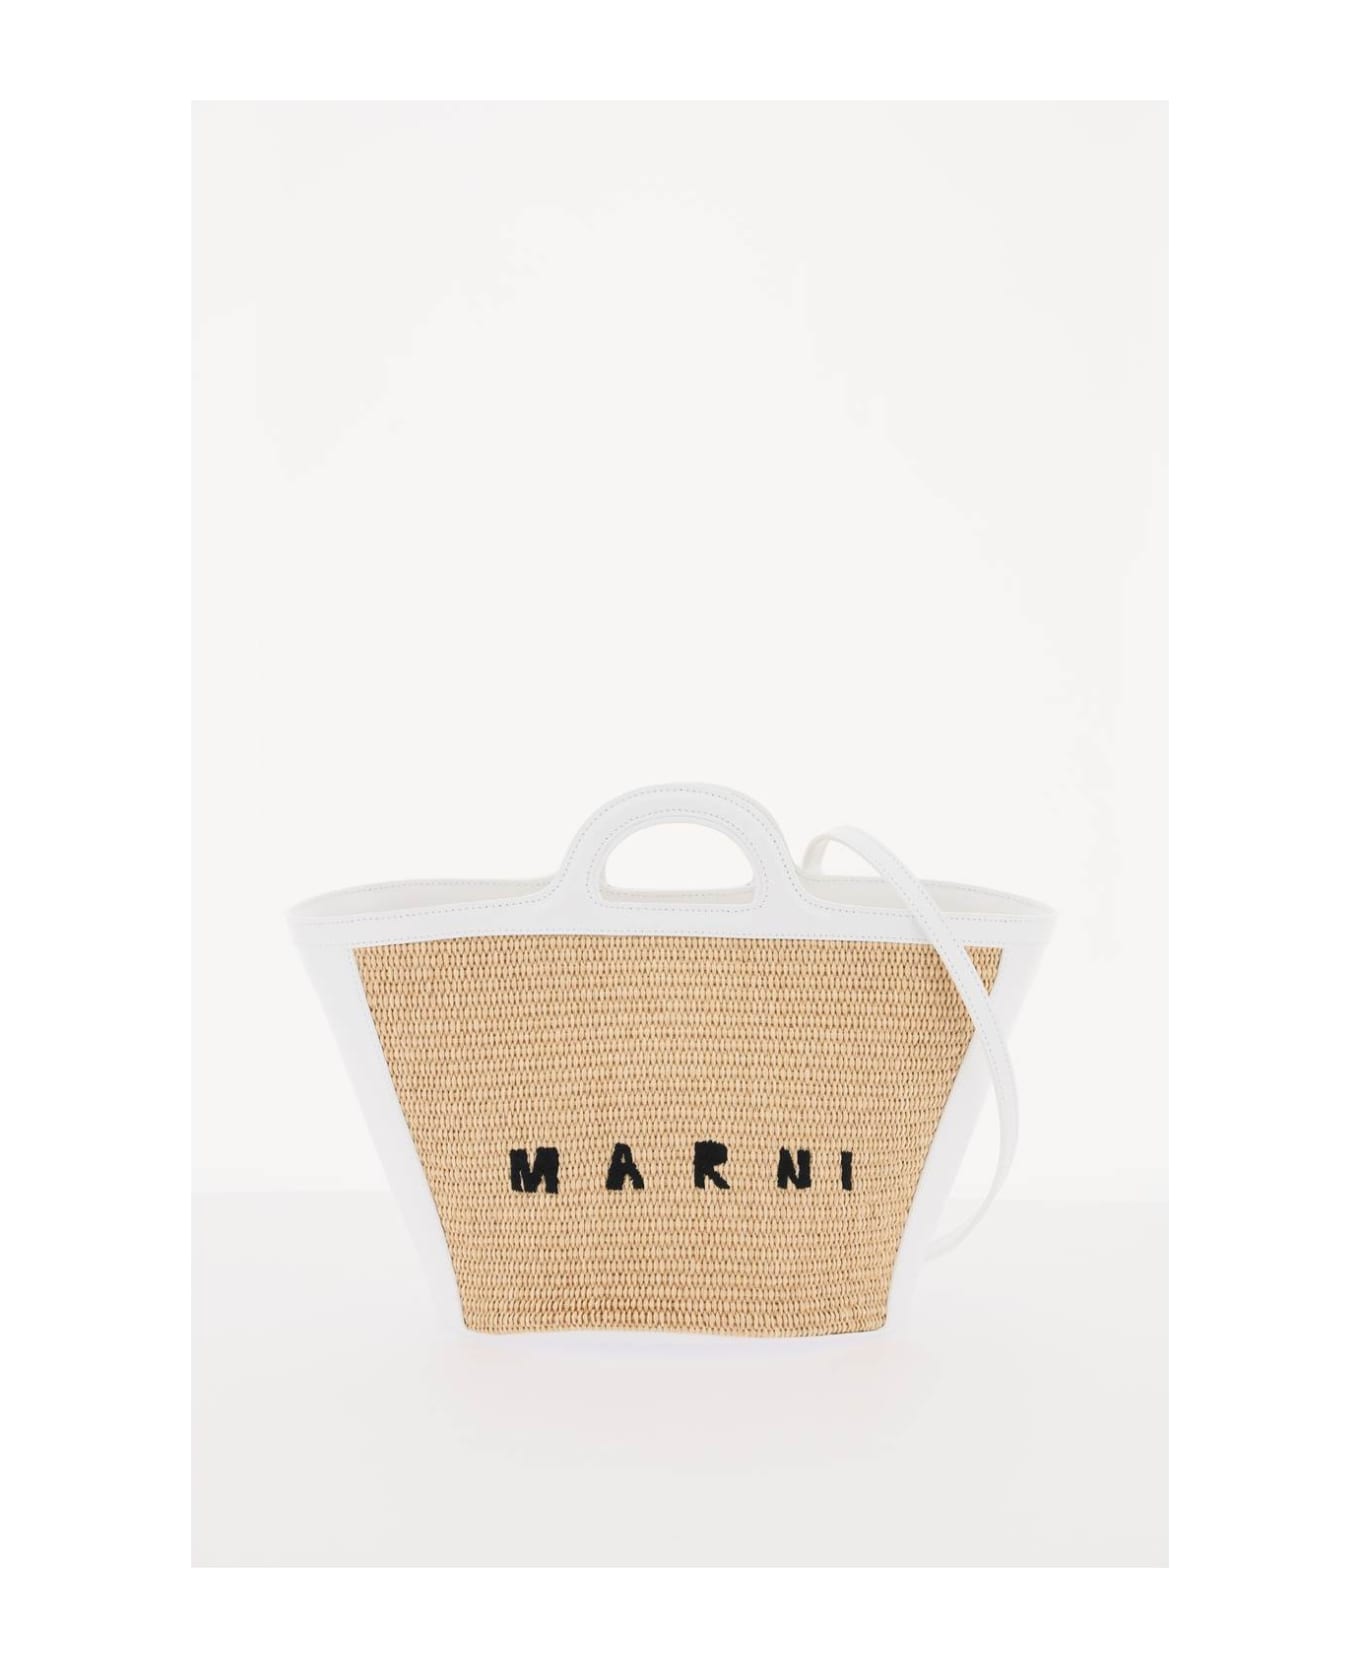 Marni Tropicalia Small Handbag - SAND STORM LILY WHITE (Beige) トートバッグ